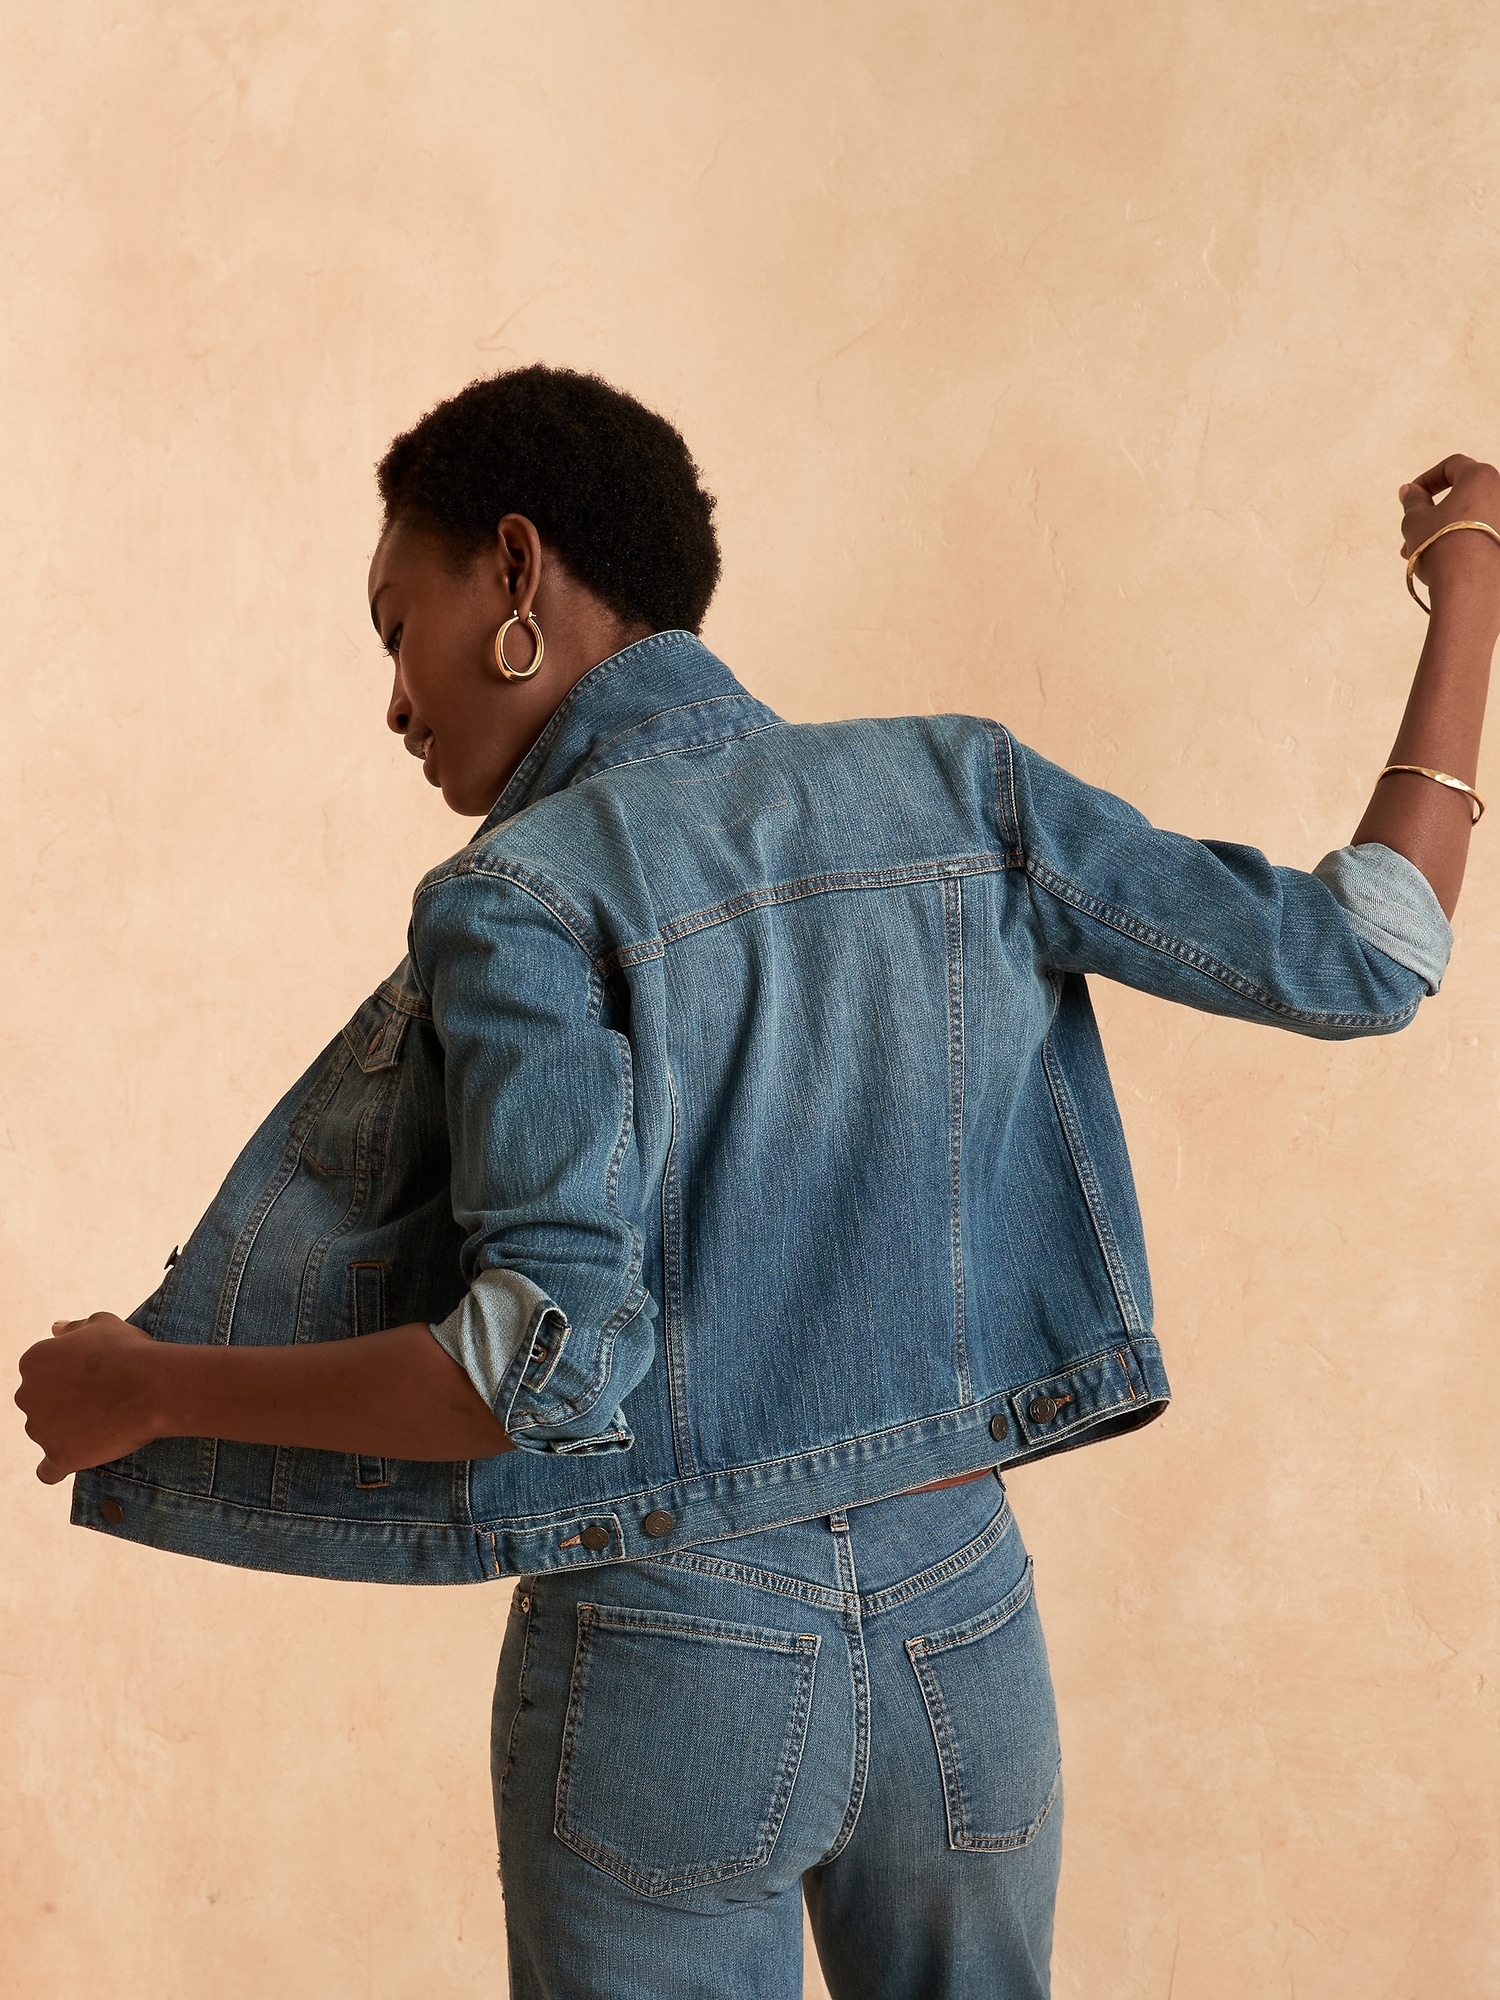 Kikit Embroidered Jean Jackets for Women | Mercari